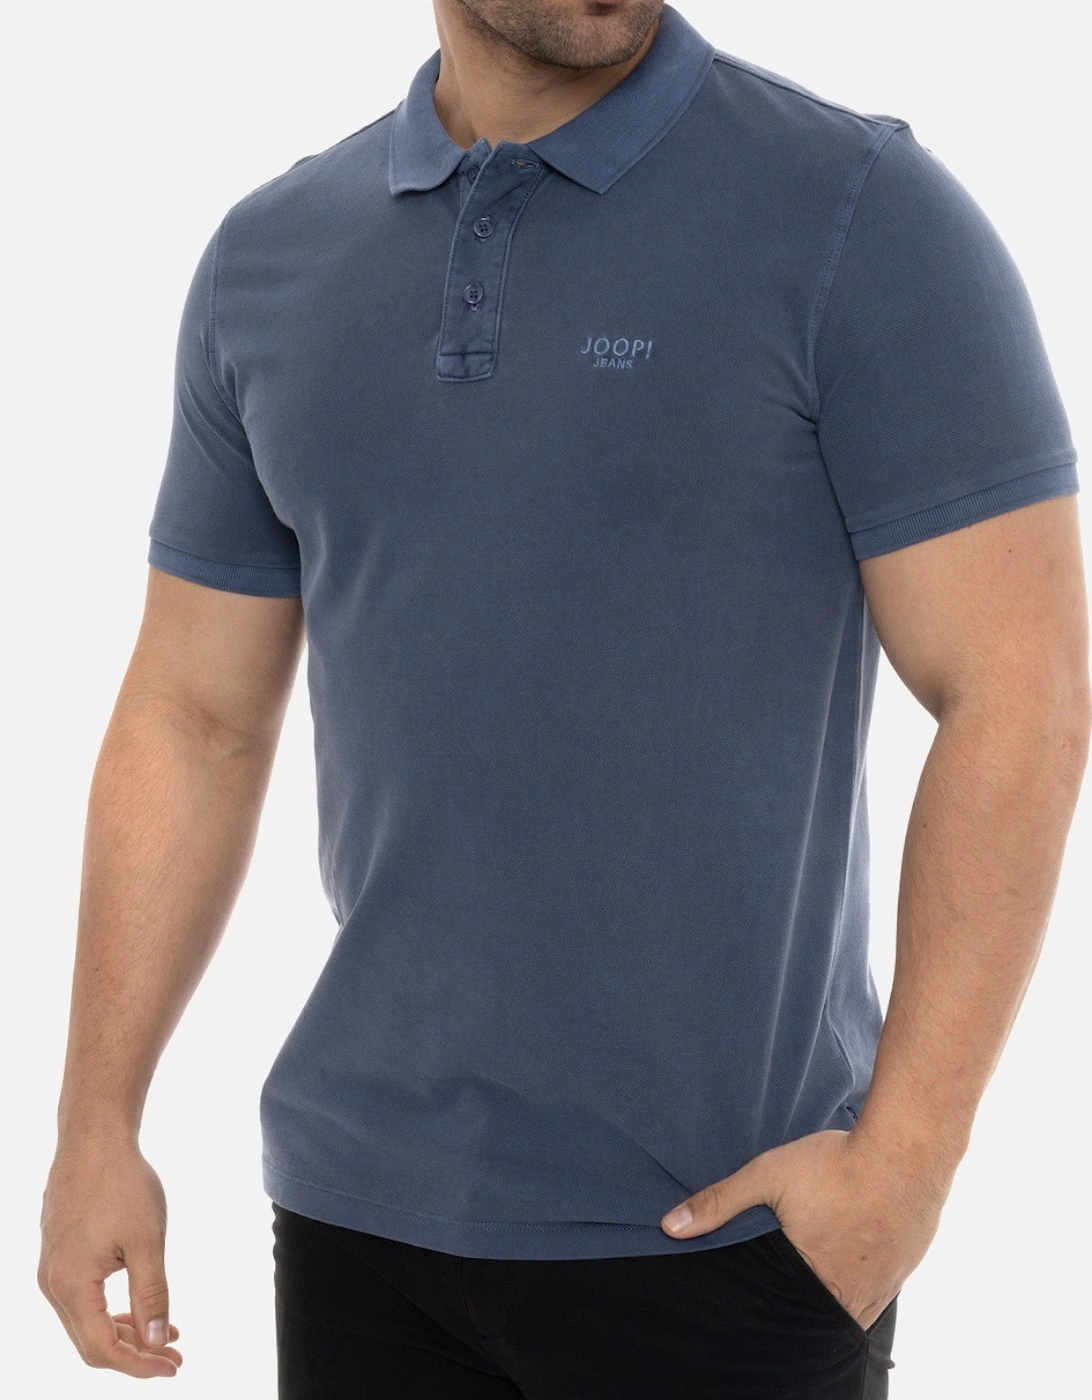 Joop Mens Plain Polo Shirt (Indigo)